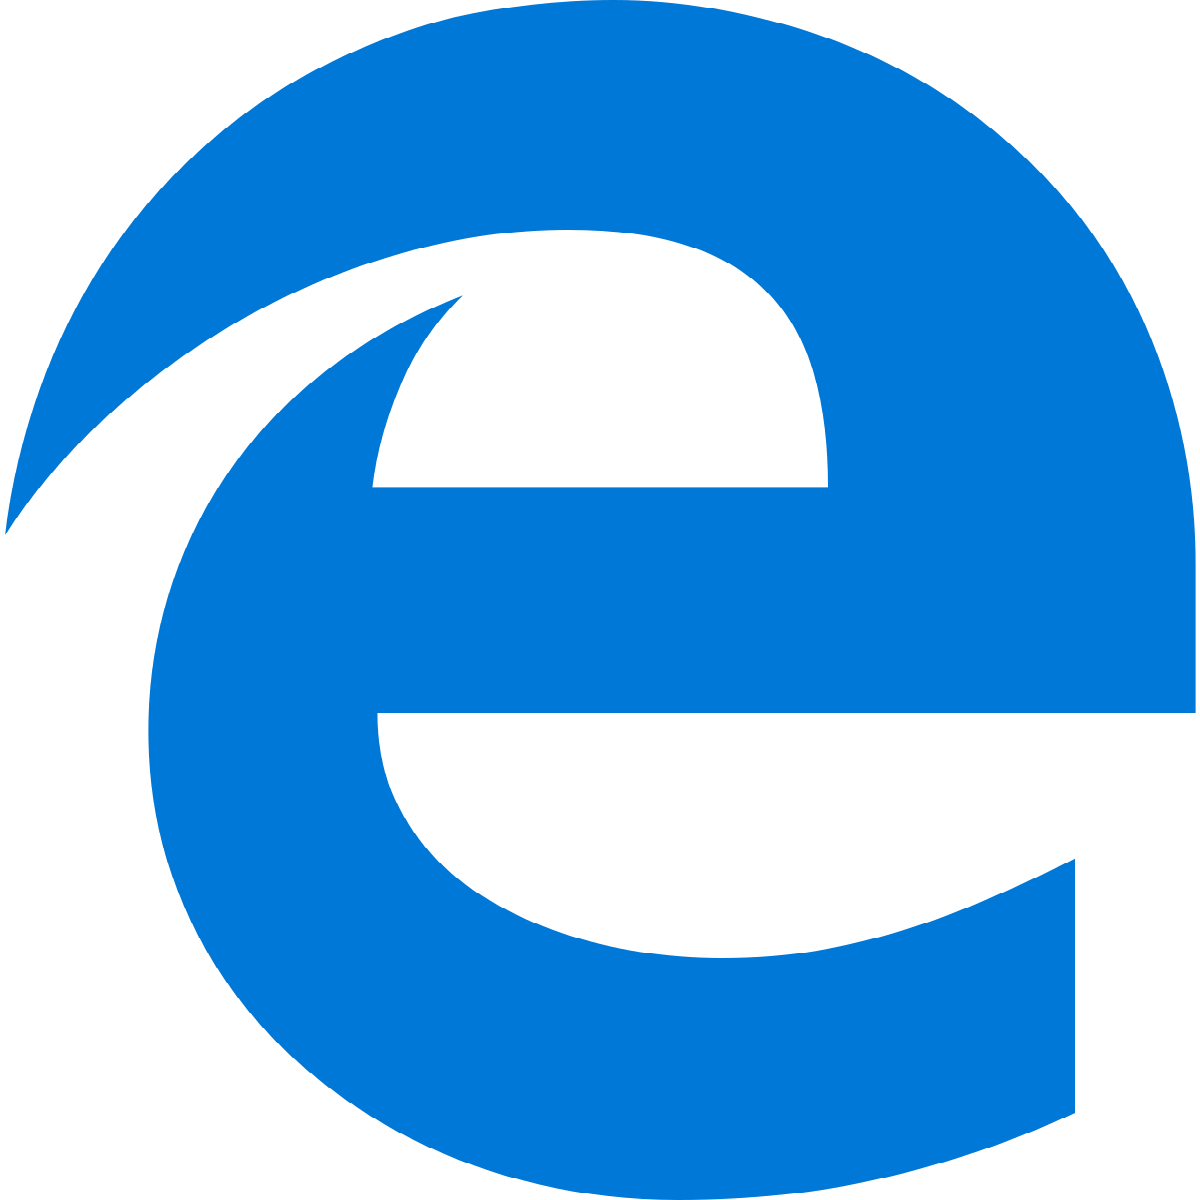 Microsoft Edge(Edge瀏覽器)